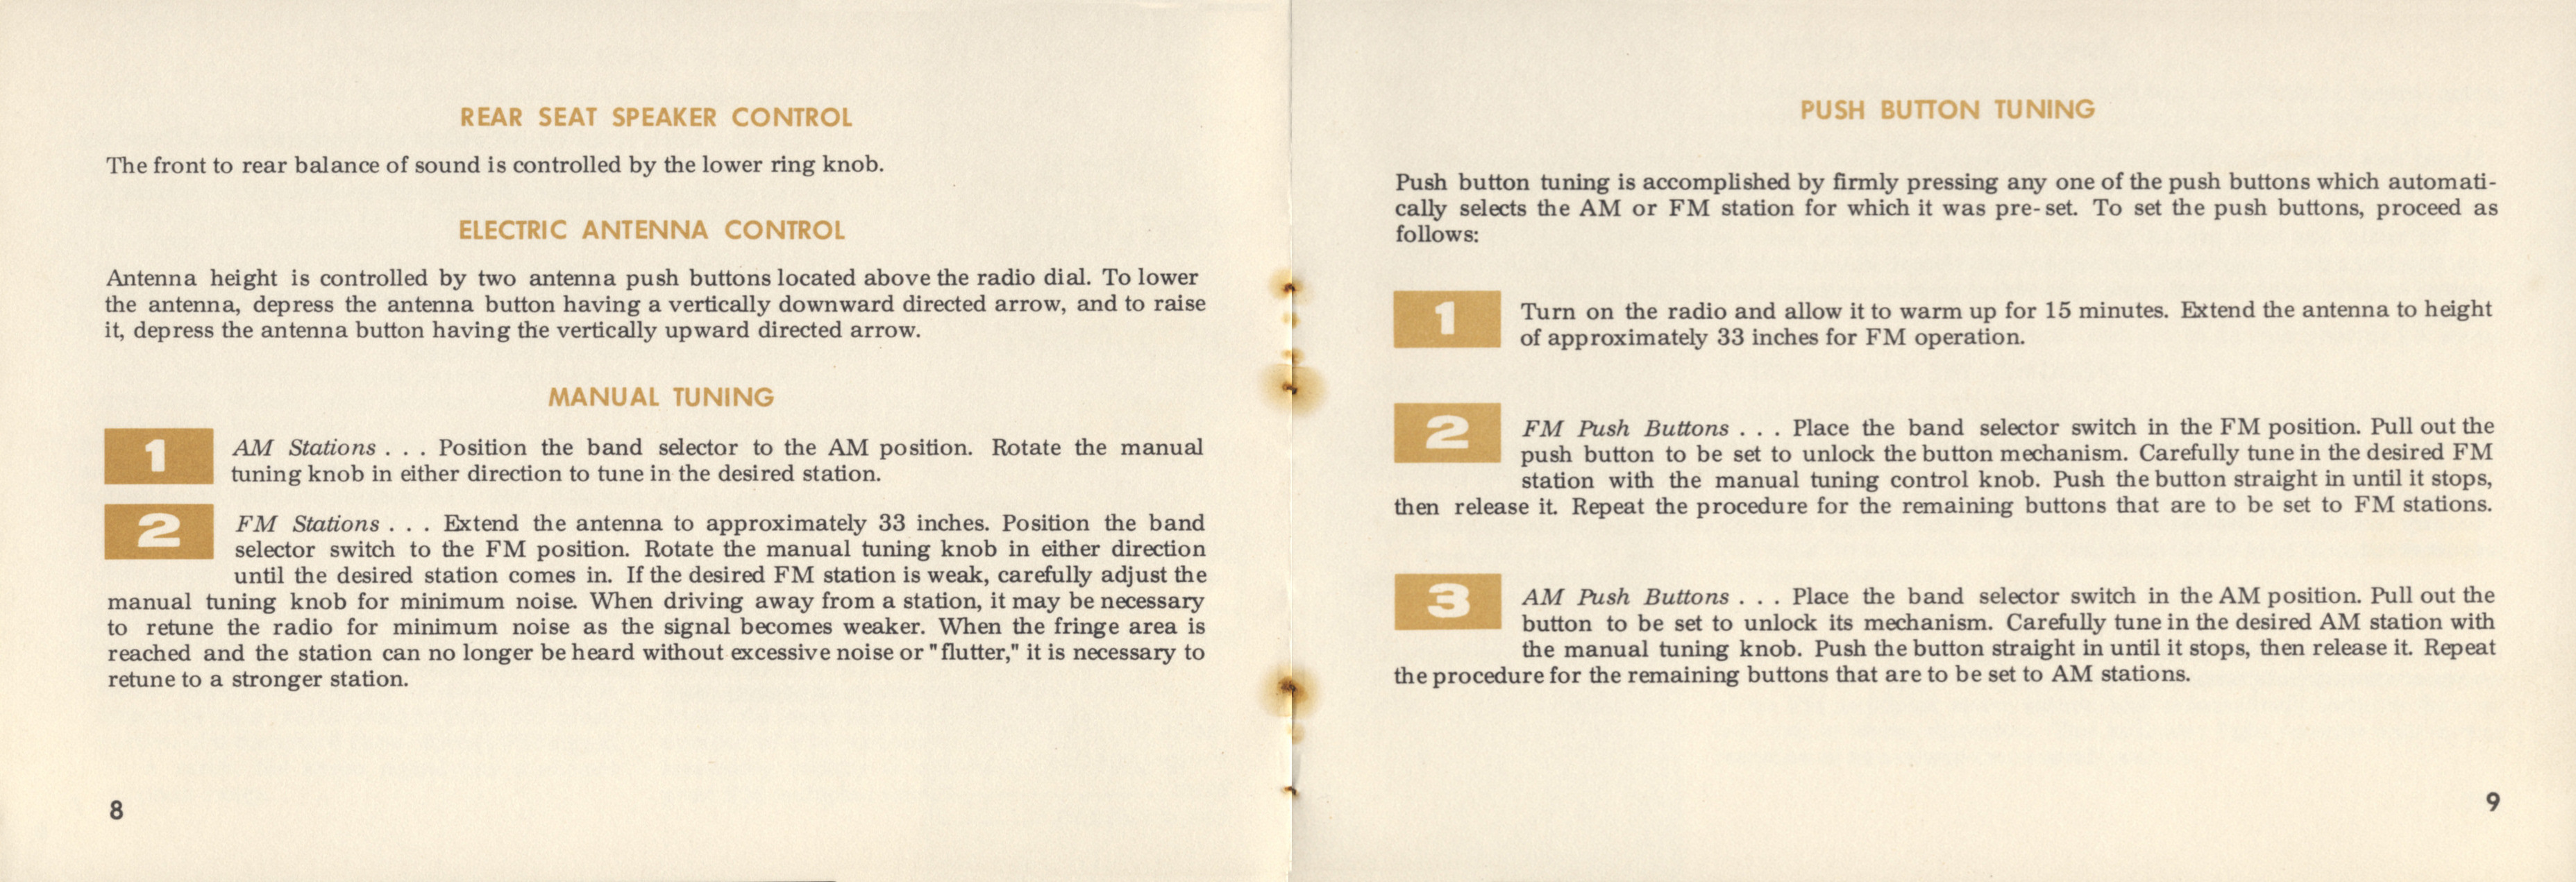 1968_Ford_Radio_Manual-08-09